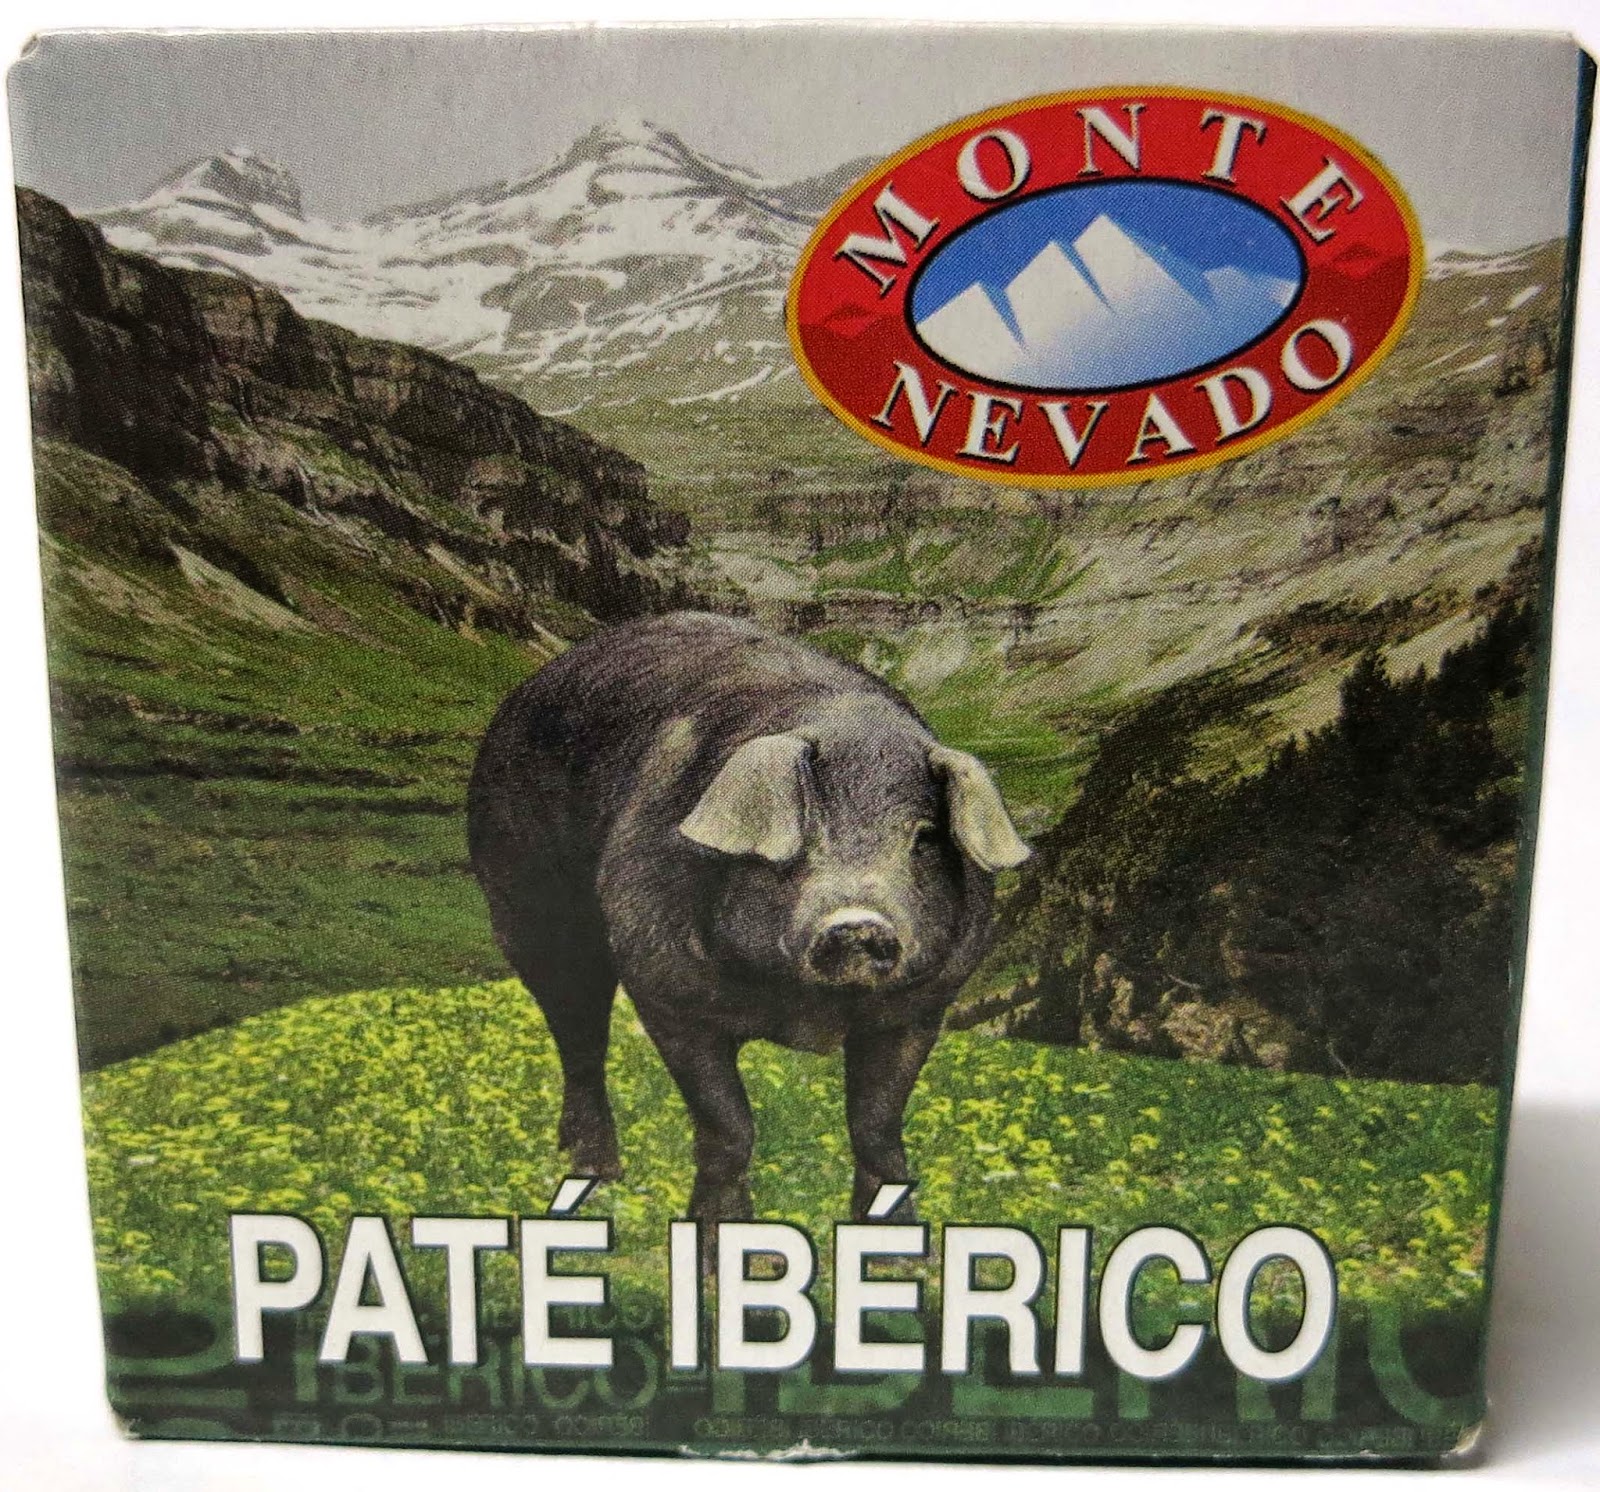 Monte Nevado西班牙伊比利黑毛豬肝醬 70g